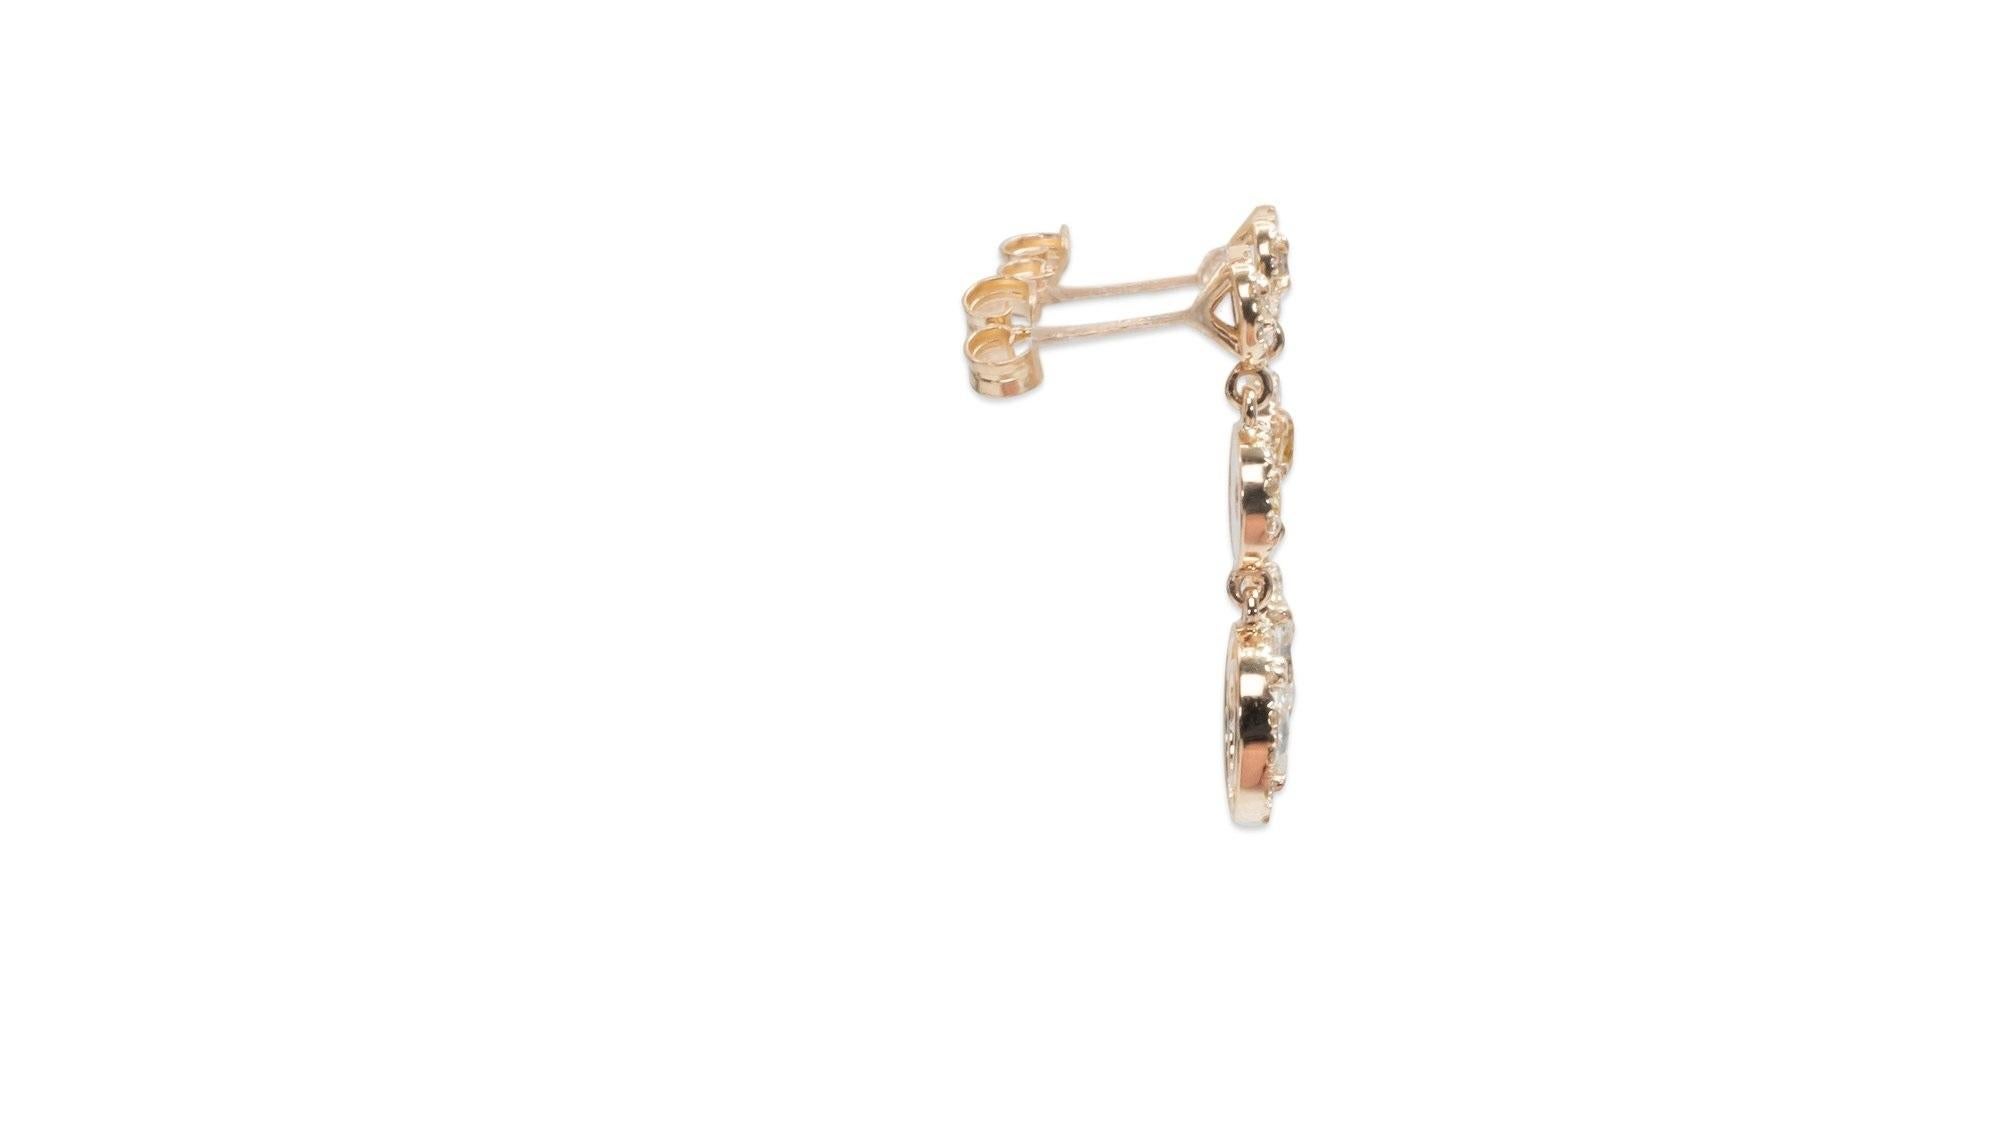 Oval Cut Beautiful 18K Yellow Gold Earrings with 2.22 carat Natural Diamonds- AIG Cert